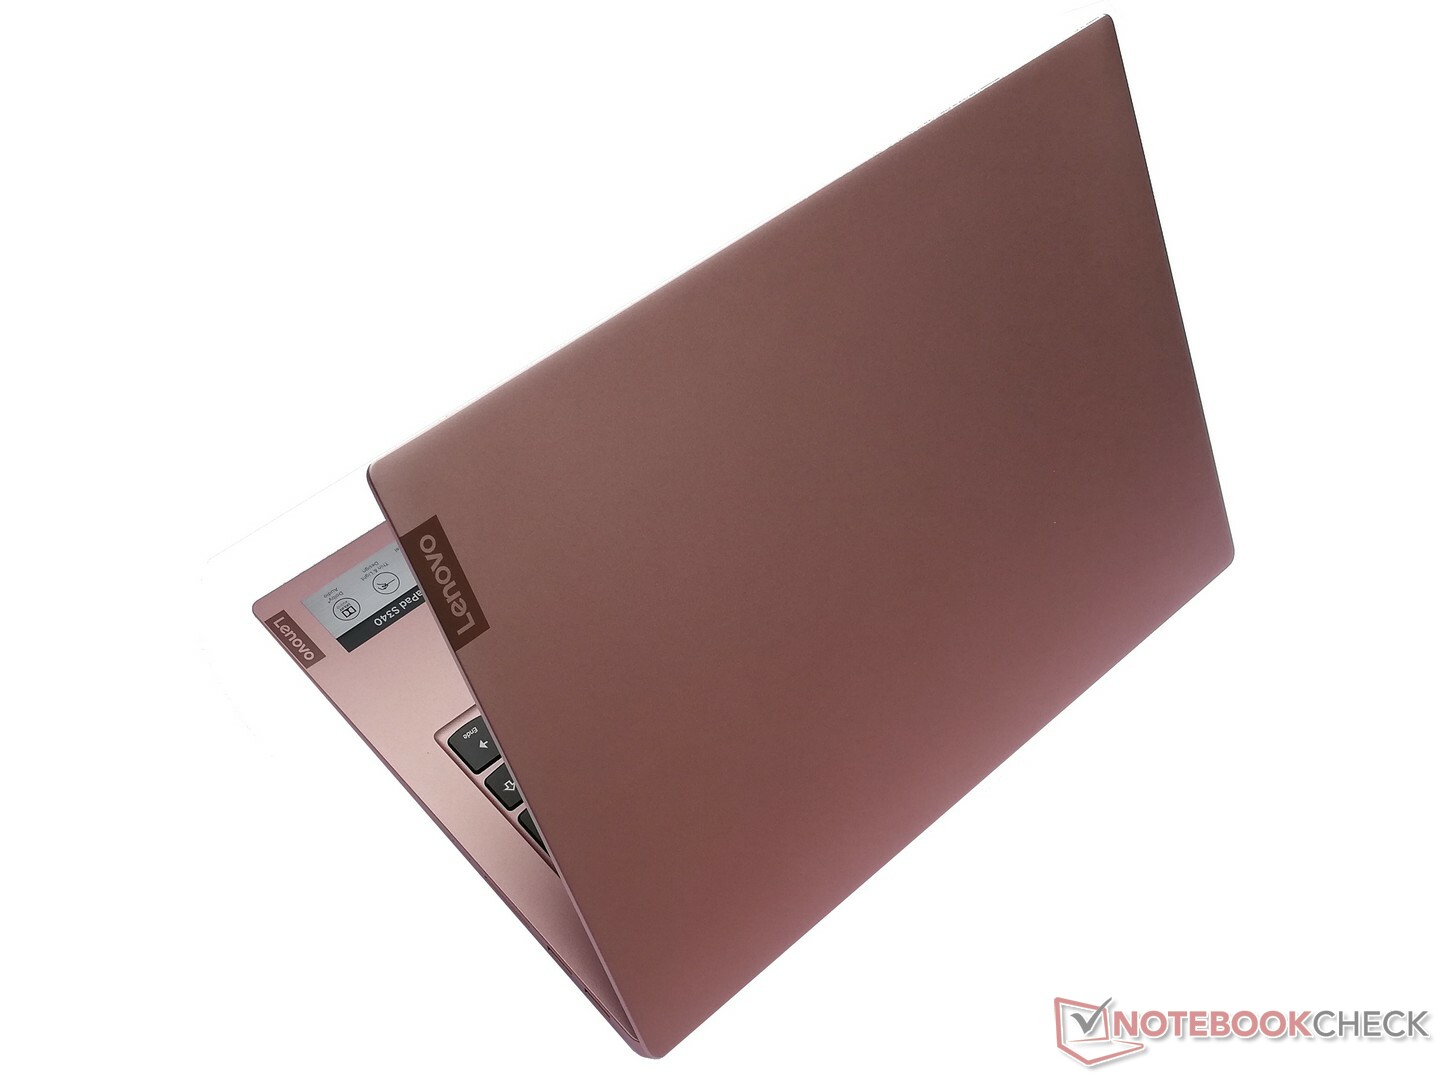 Lenovo Ideapad S340 I7 8565u Mx230 Laptop Review Notebookcheck Net Reviews